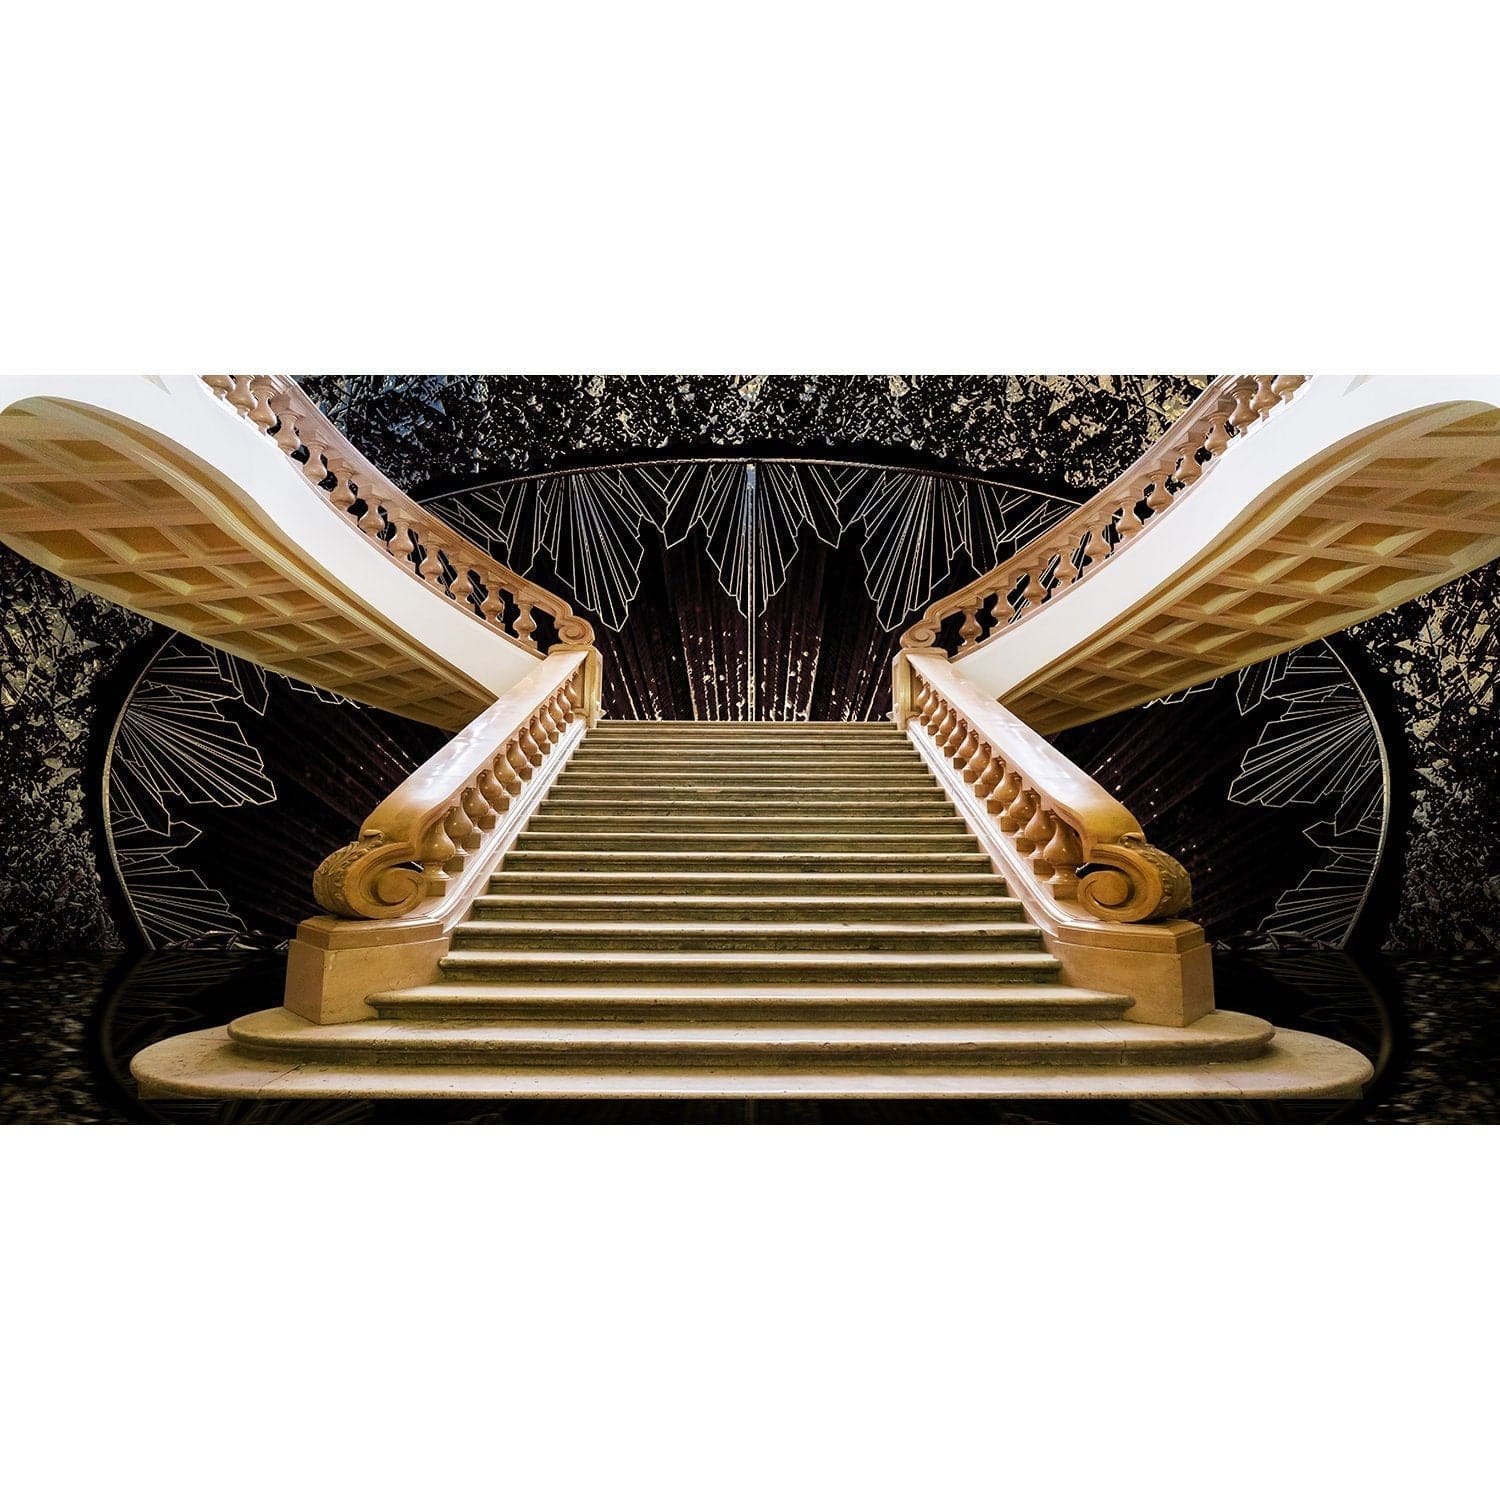 1920s Art Deco Staircase Photo Backdrop - Pro 20  x 10  